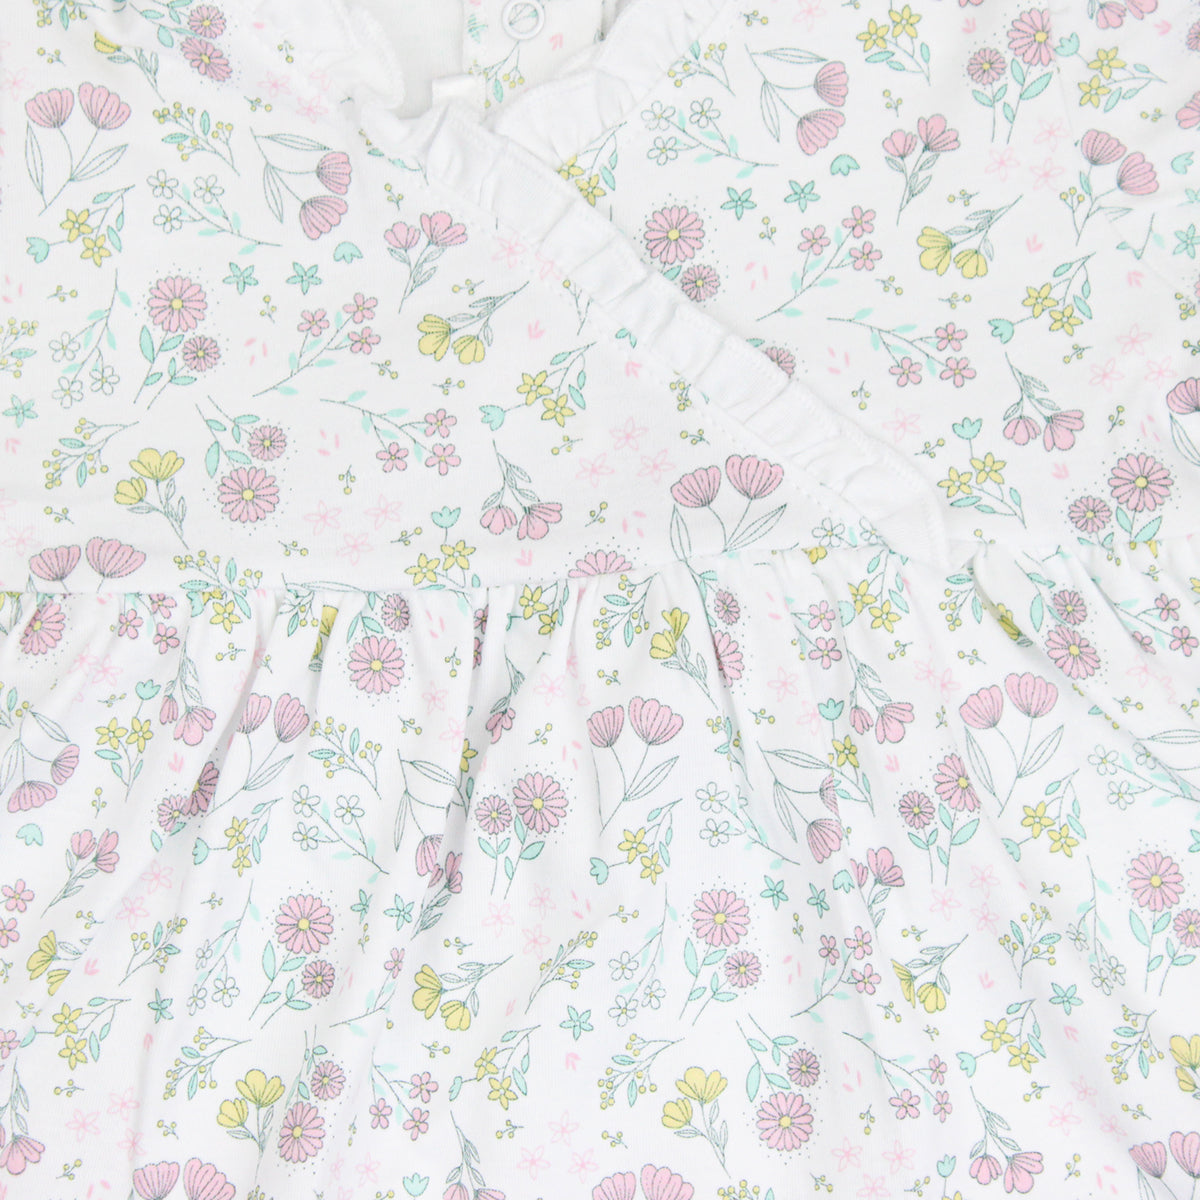 Spring Blossoms print Dress | Baby Girl